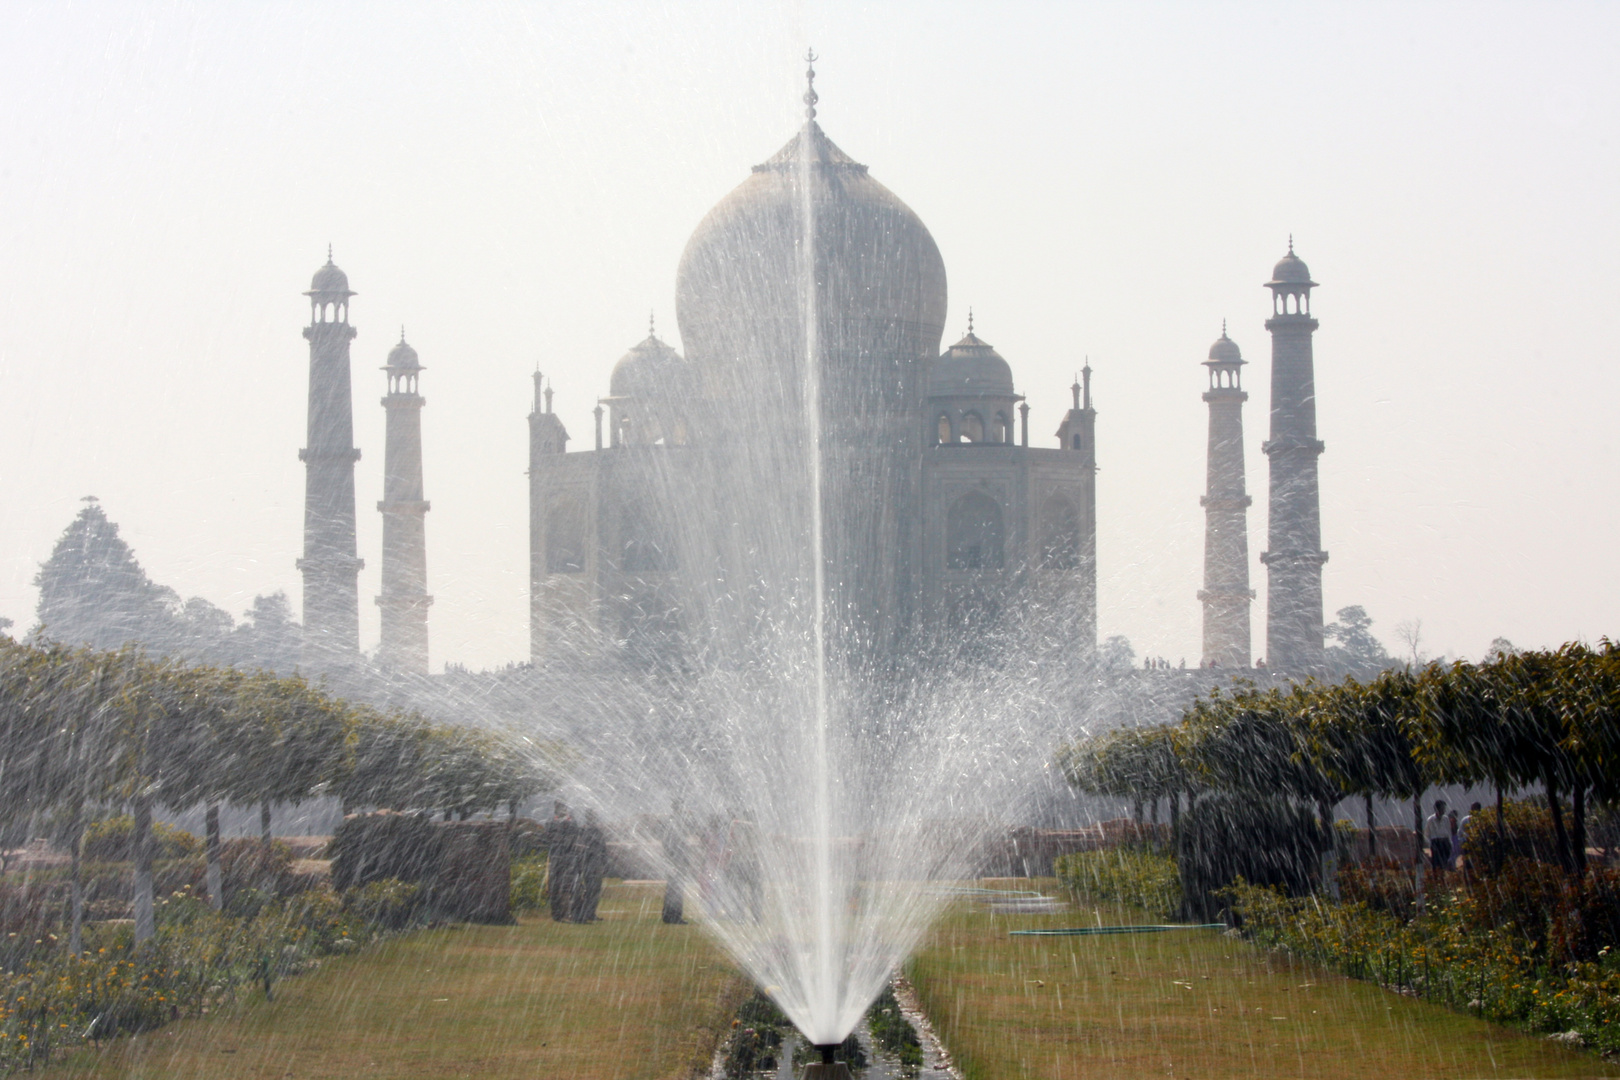 Taj Mahal - Ein anderer Blick